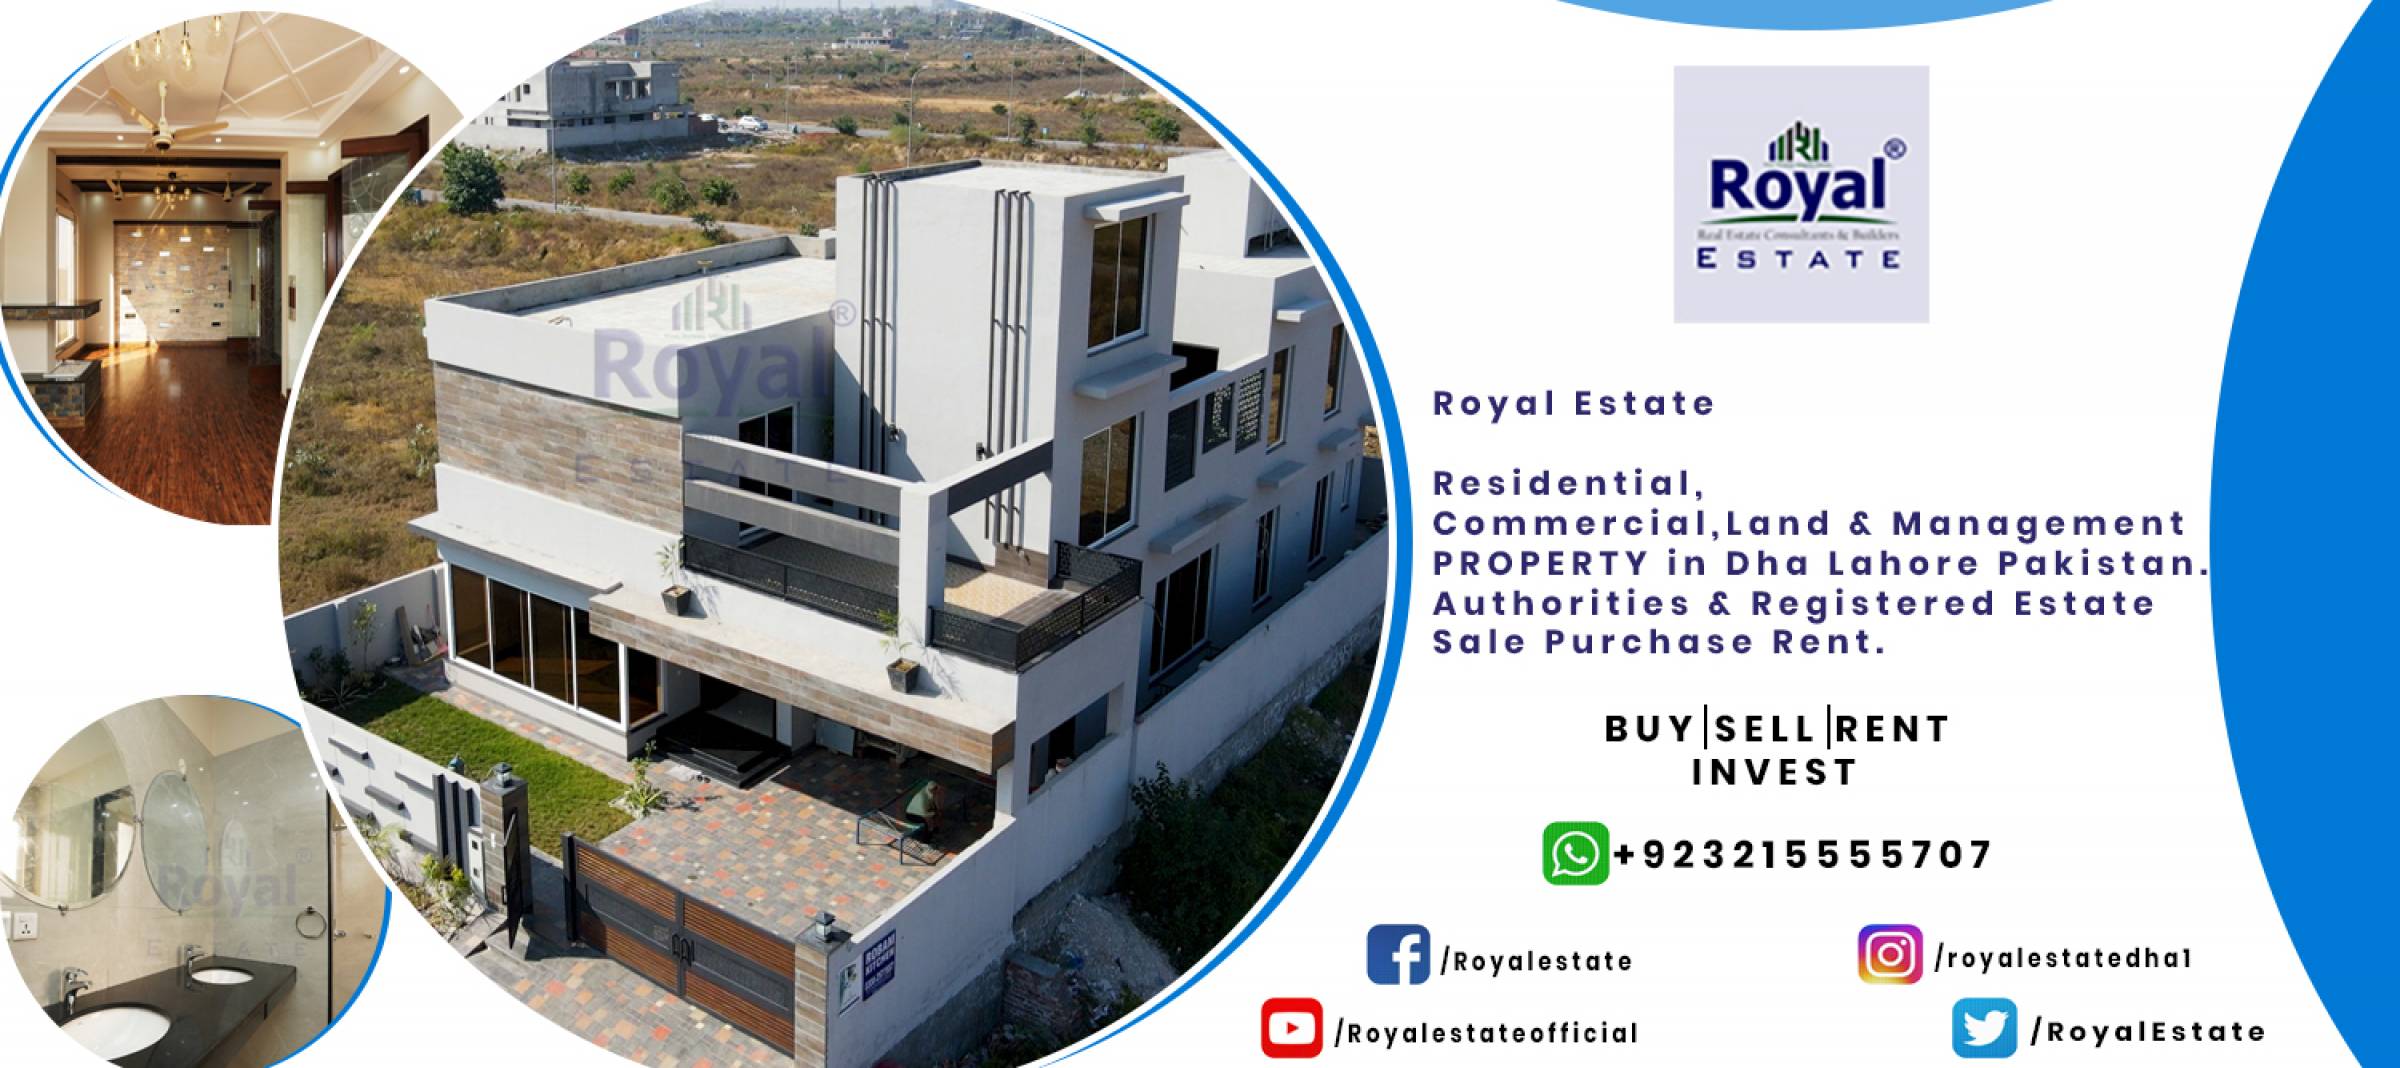 Royal Estate Real Estate Company